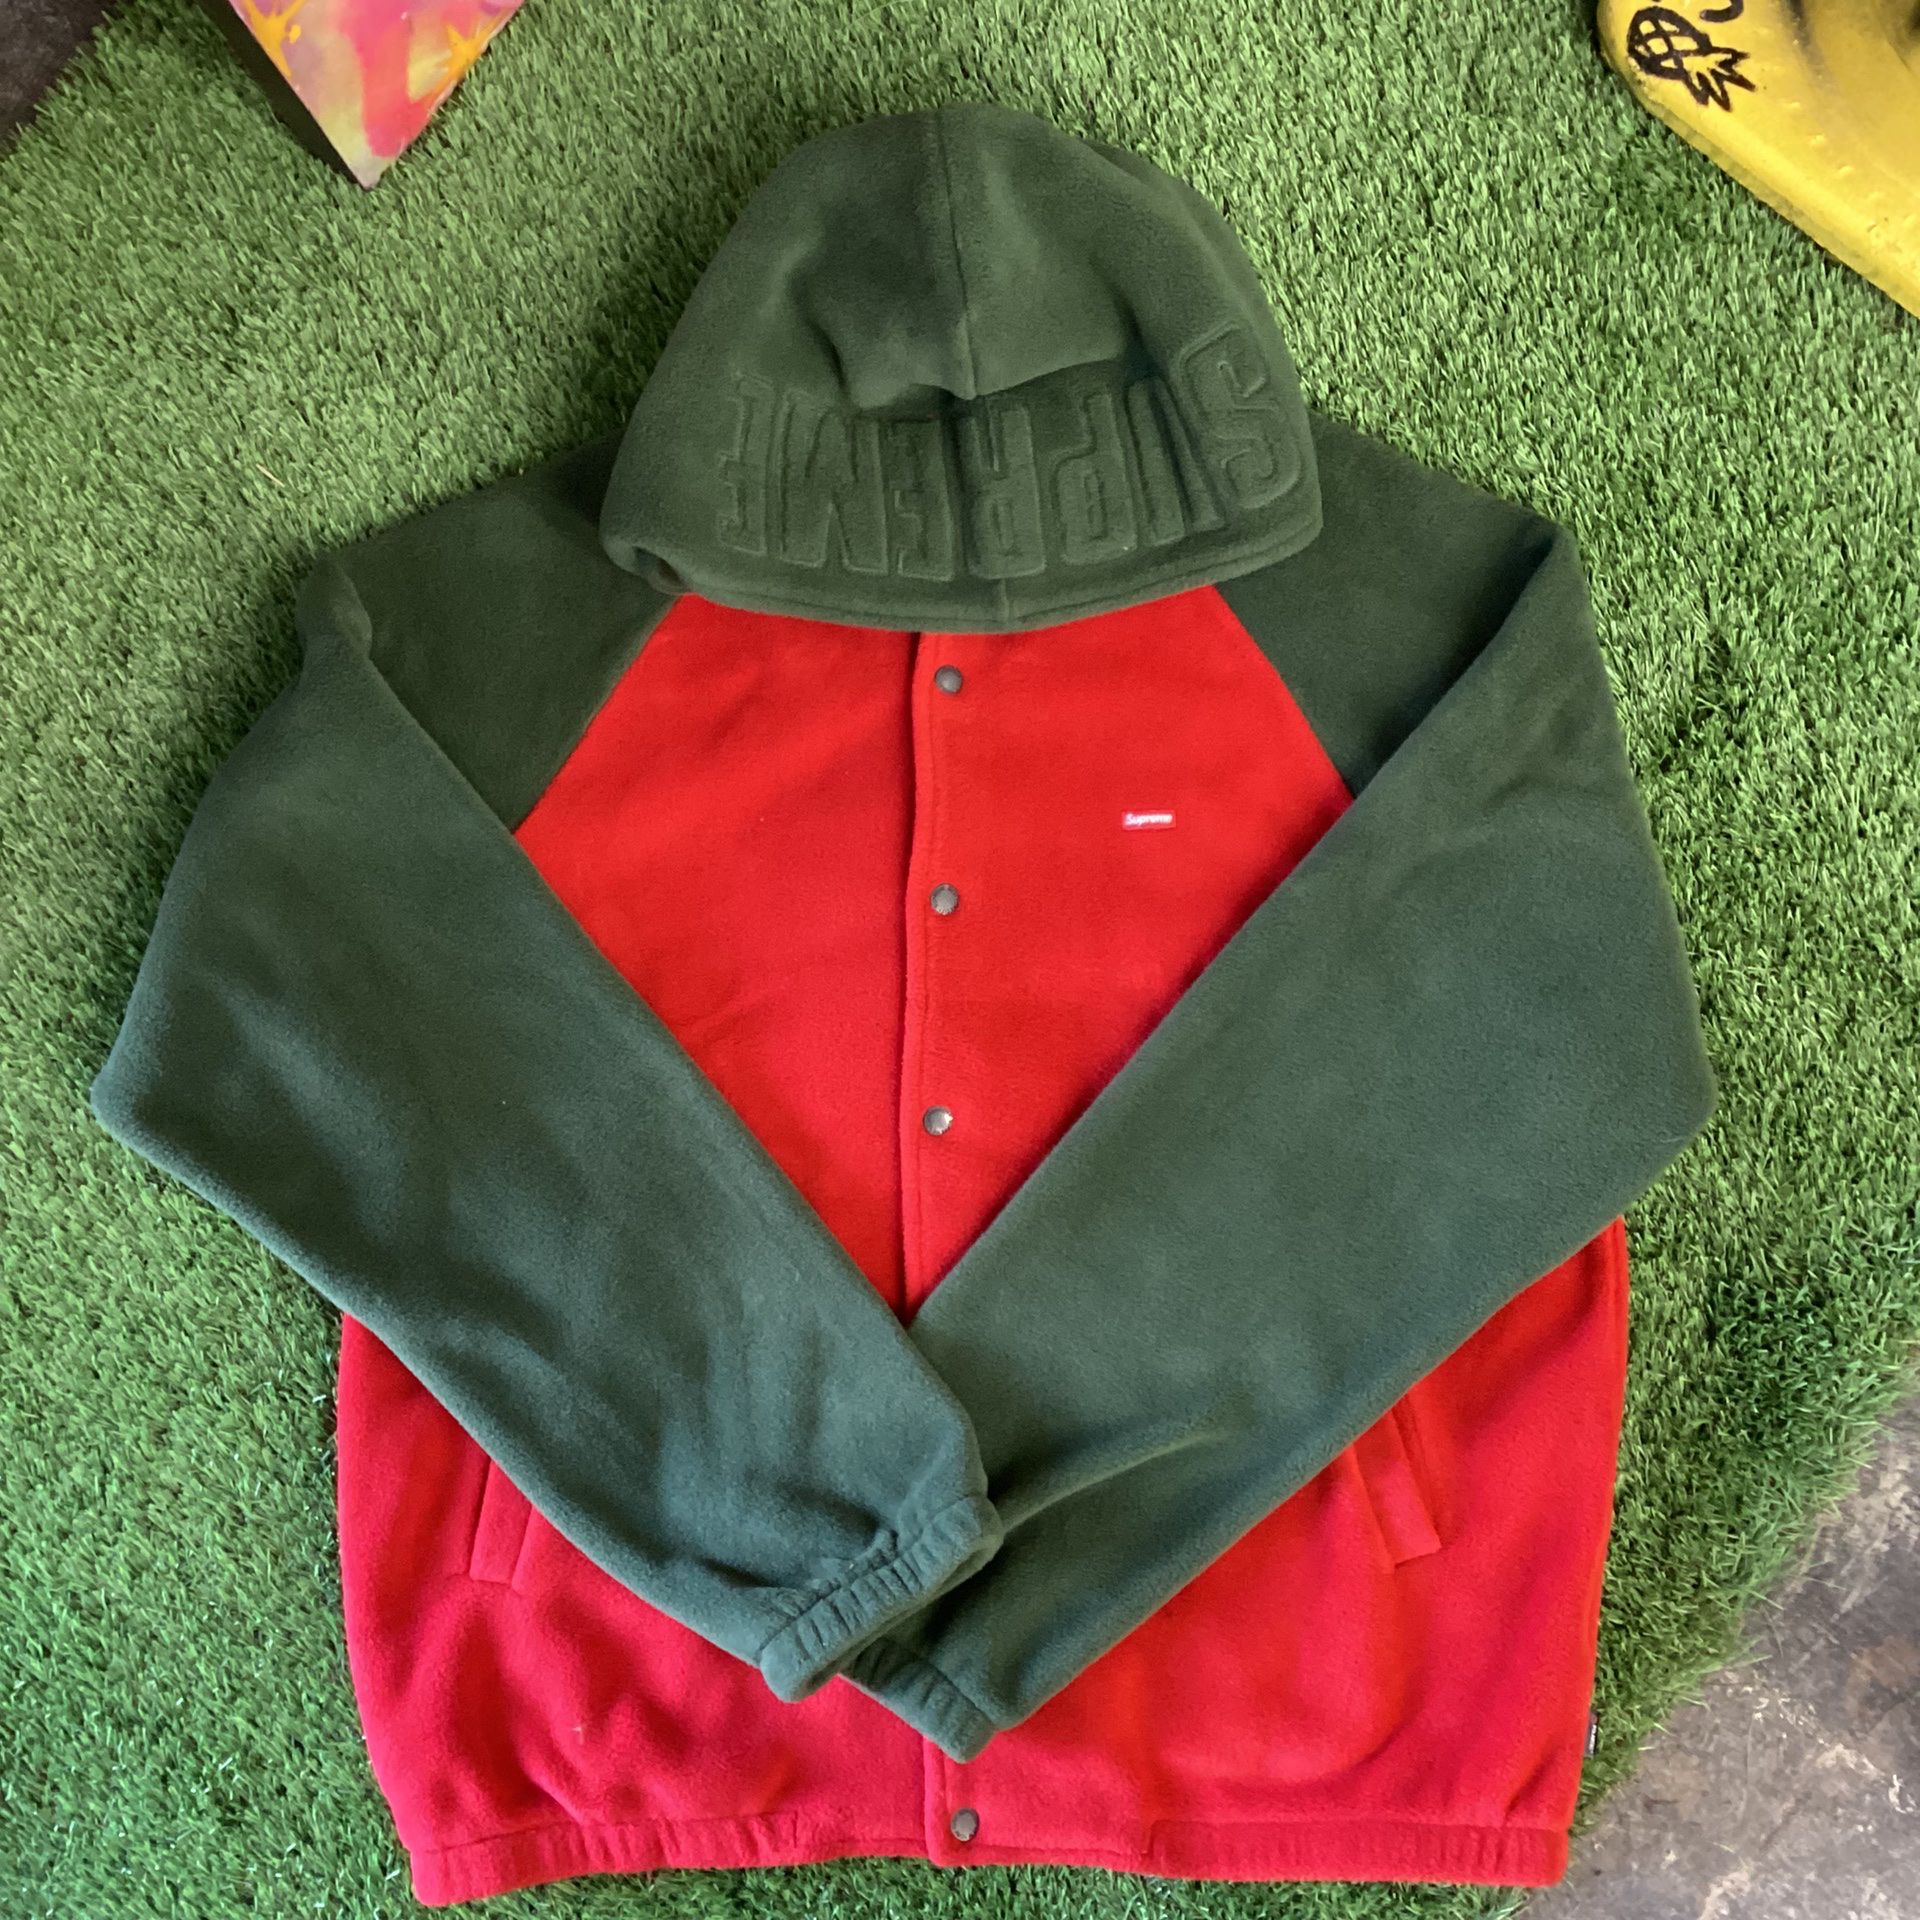 Supreme Polartec Hooded Raglan Jacket for Sale in Los Angeles, CA - OfferUp